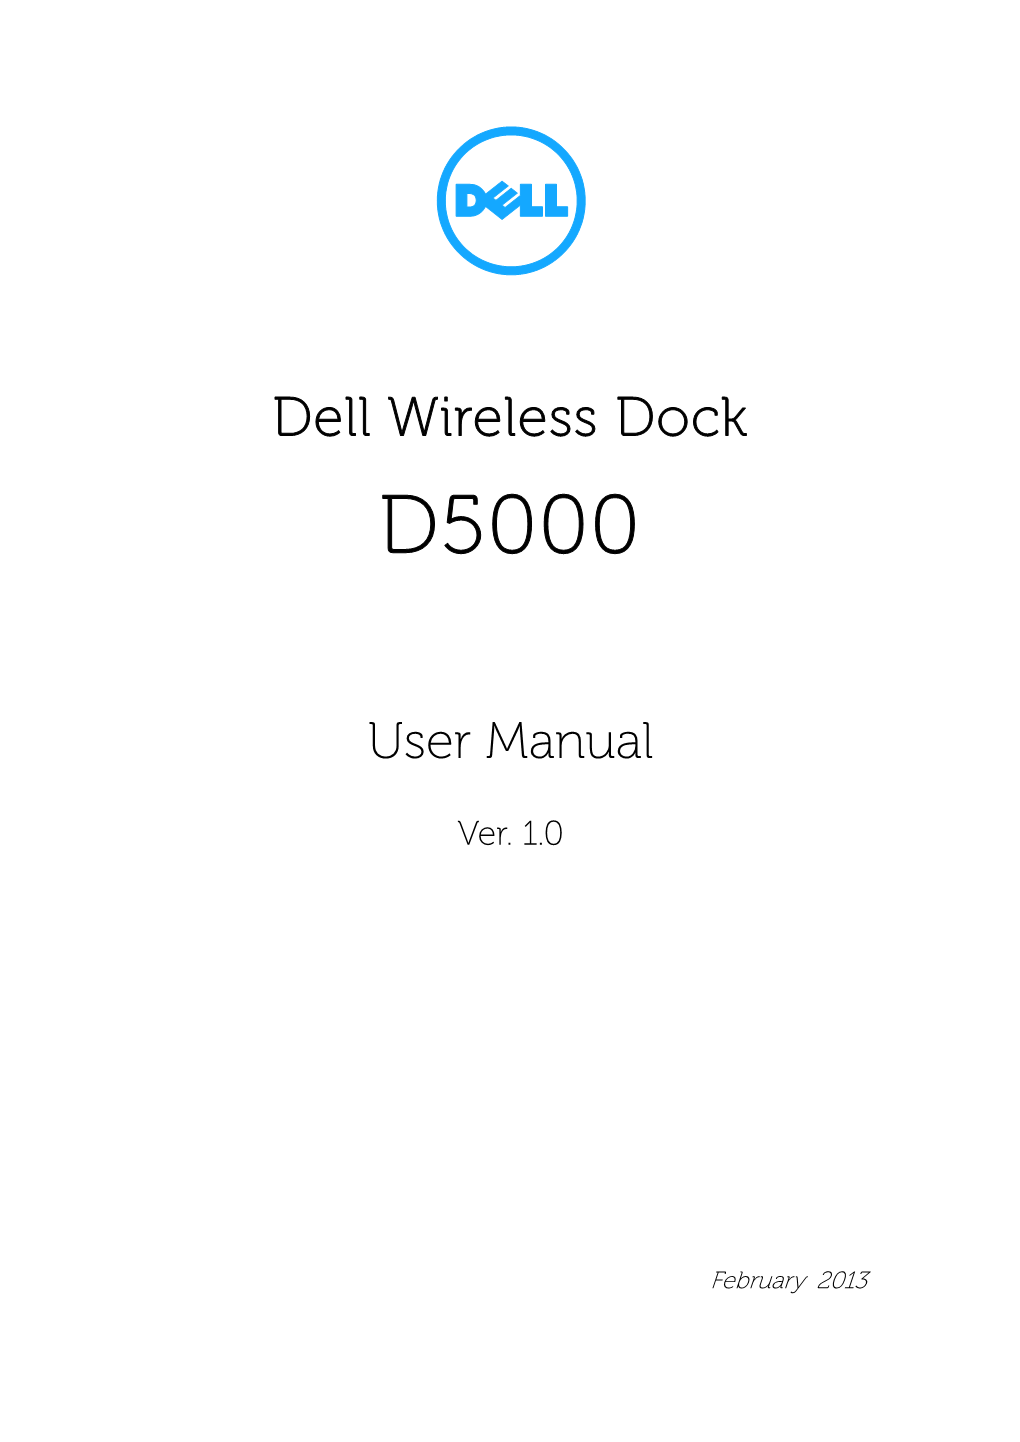 Dell Wireless Dock D5000 User Manual